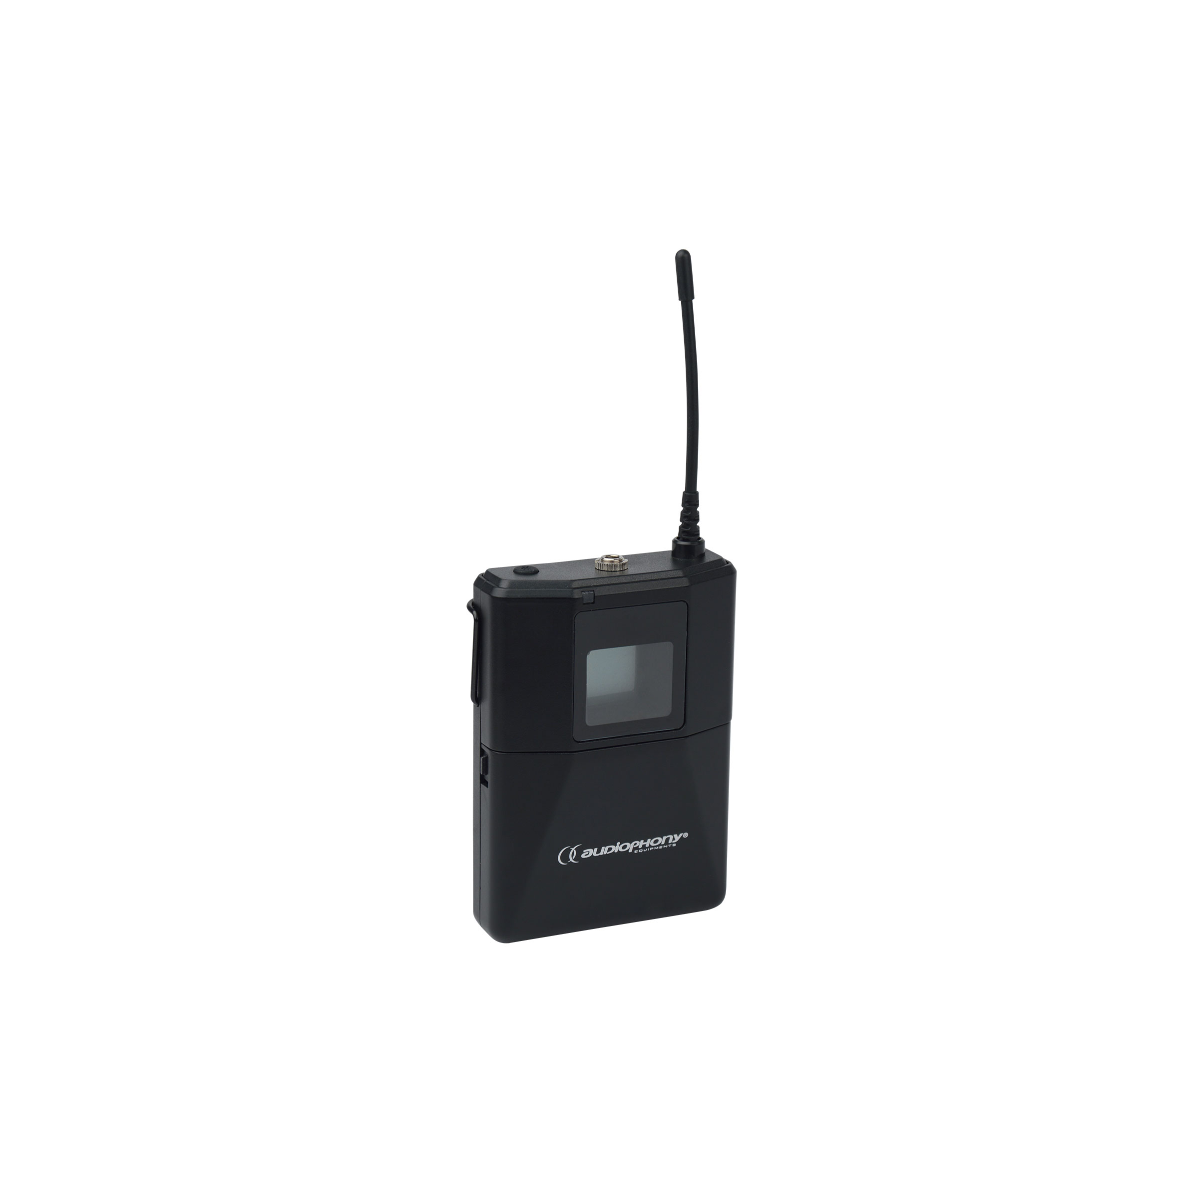 Micros sonos portables - Audiophony - CR80AMK2-BODY